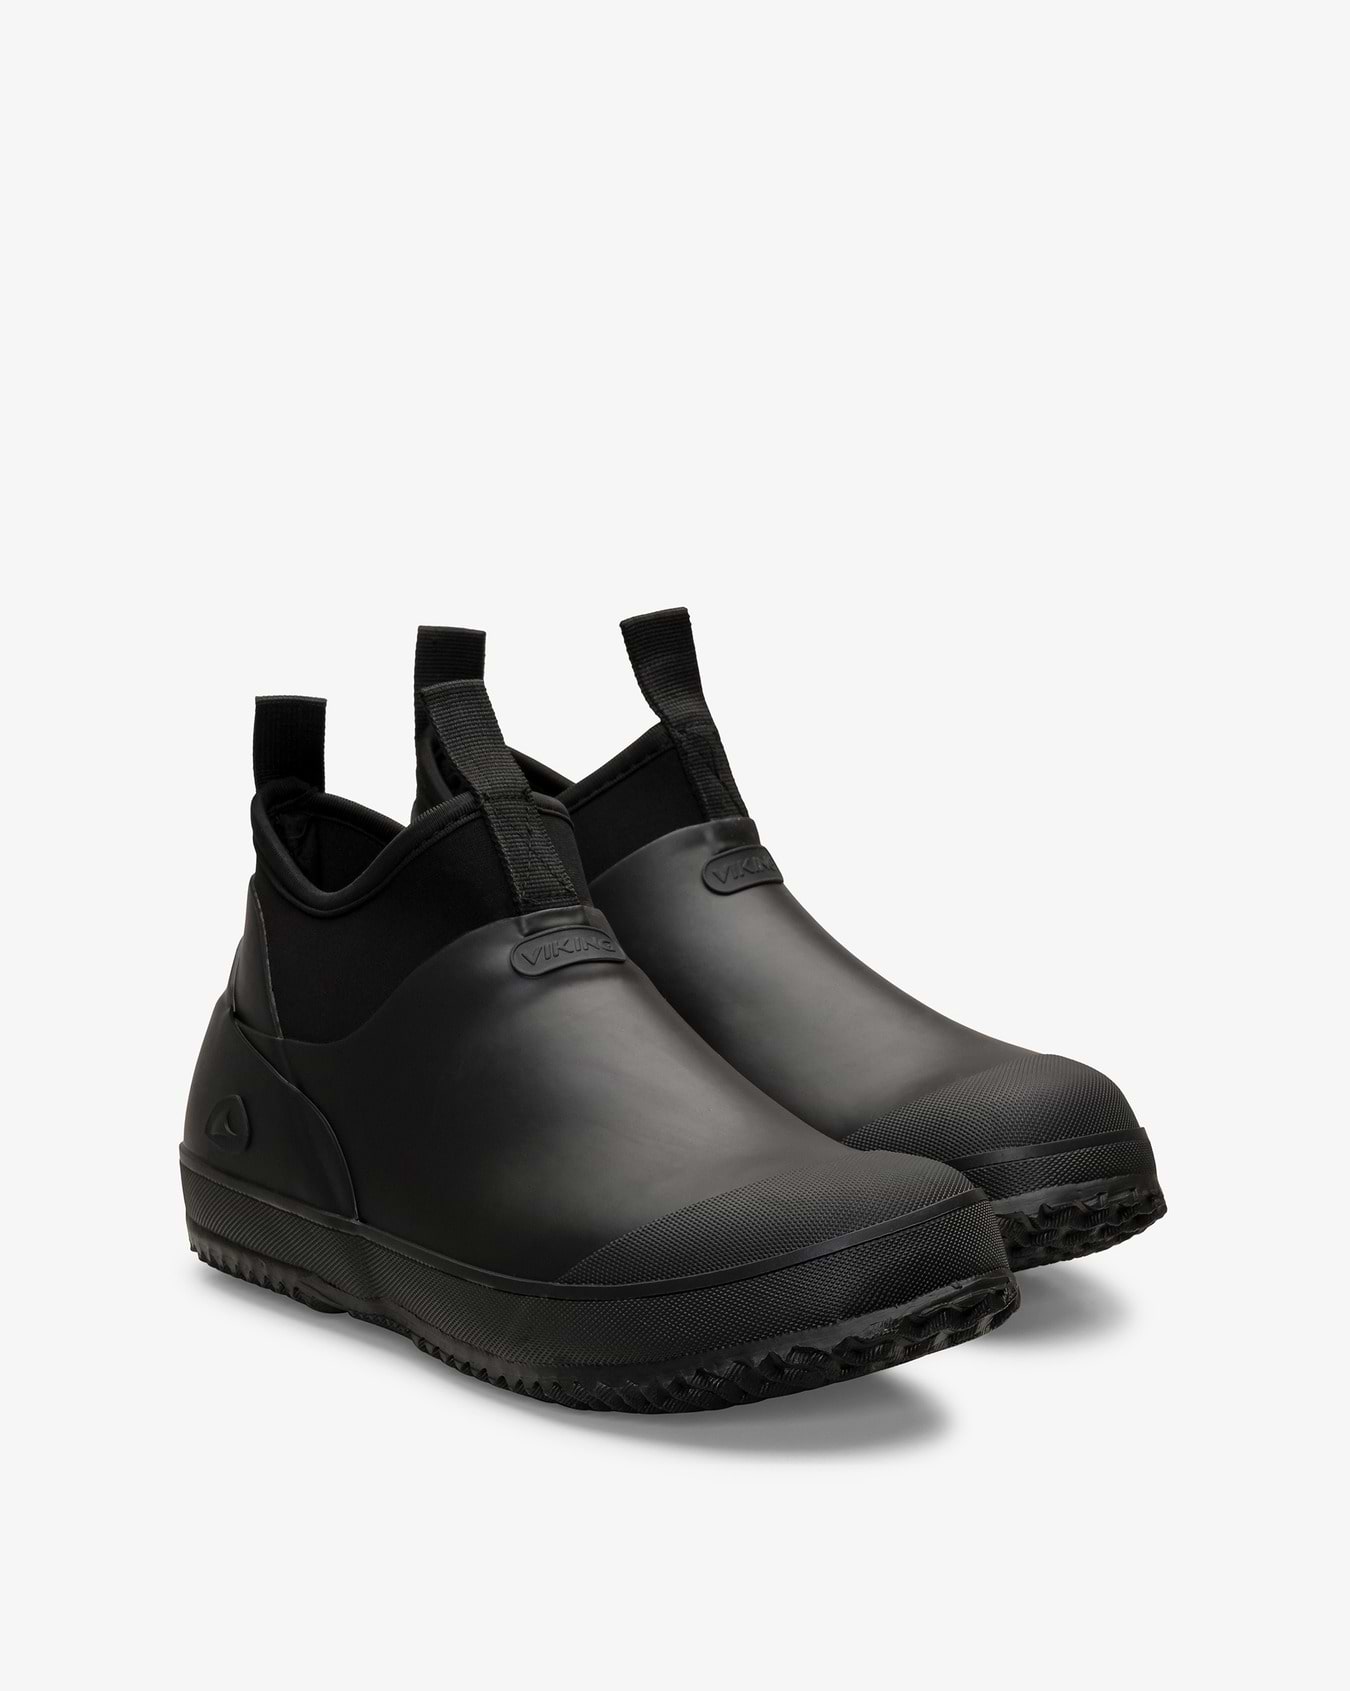 Paveport Black/Black Rubber Boot